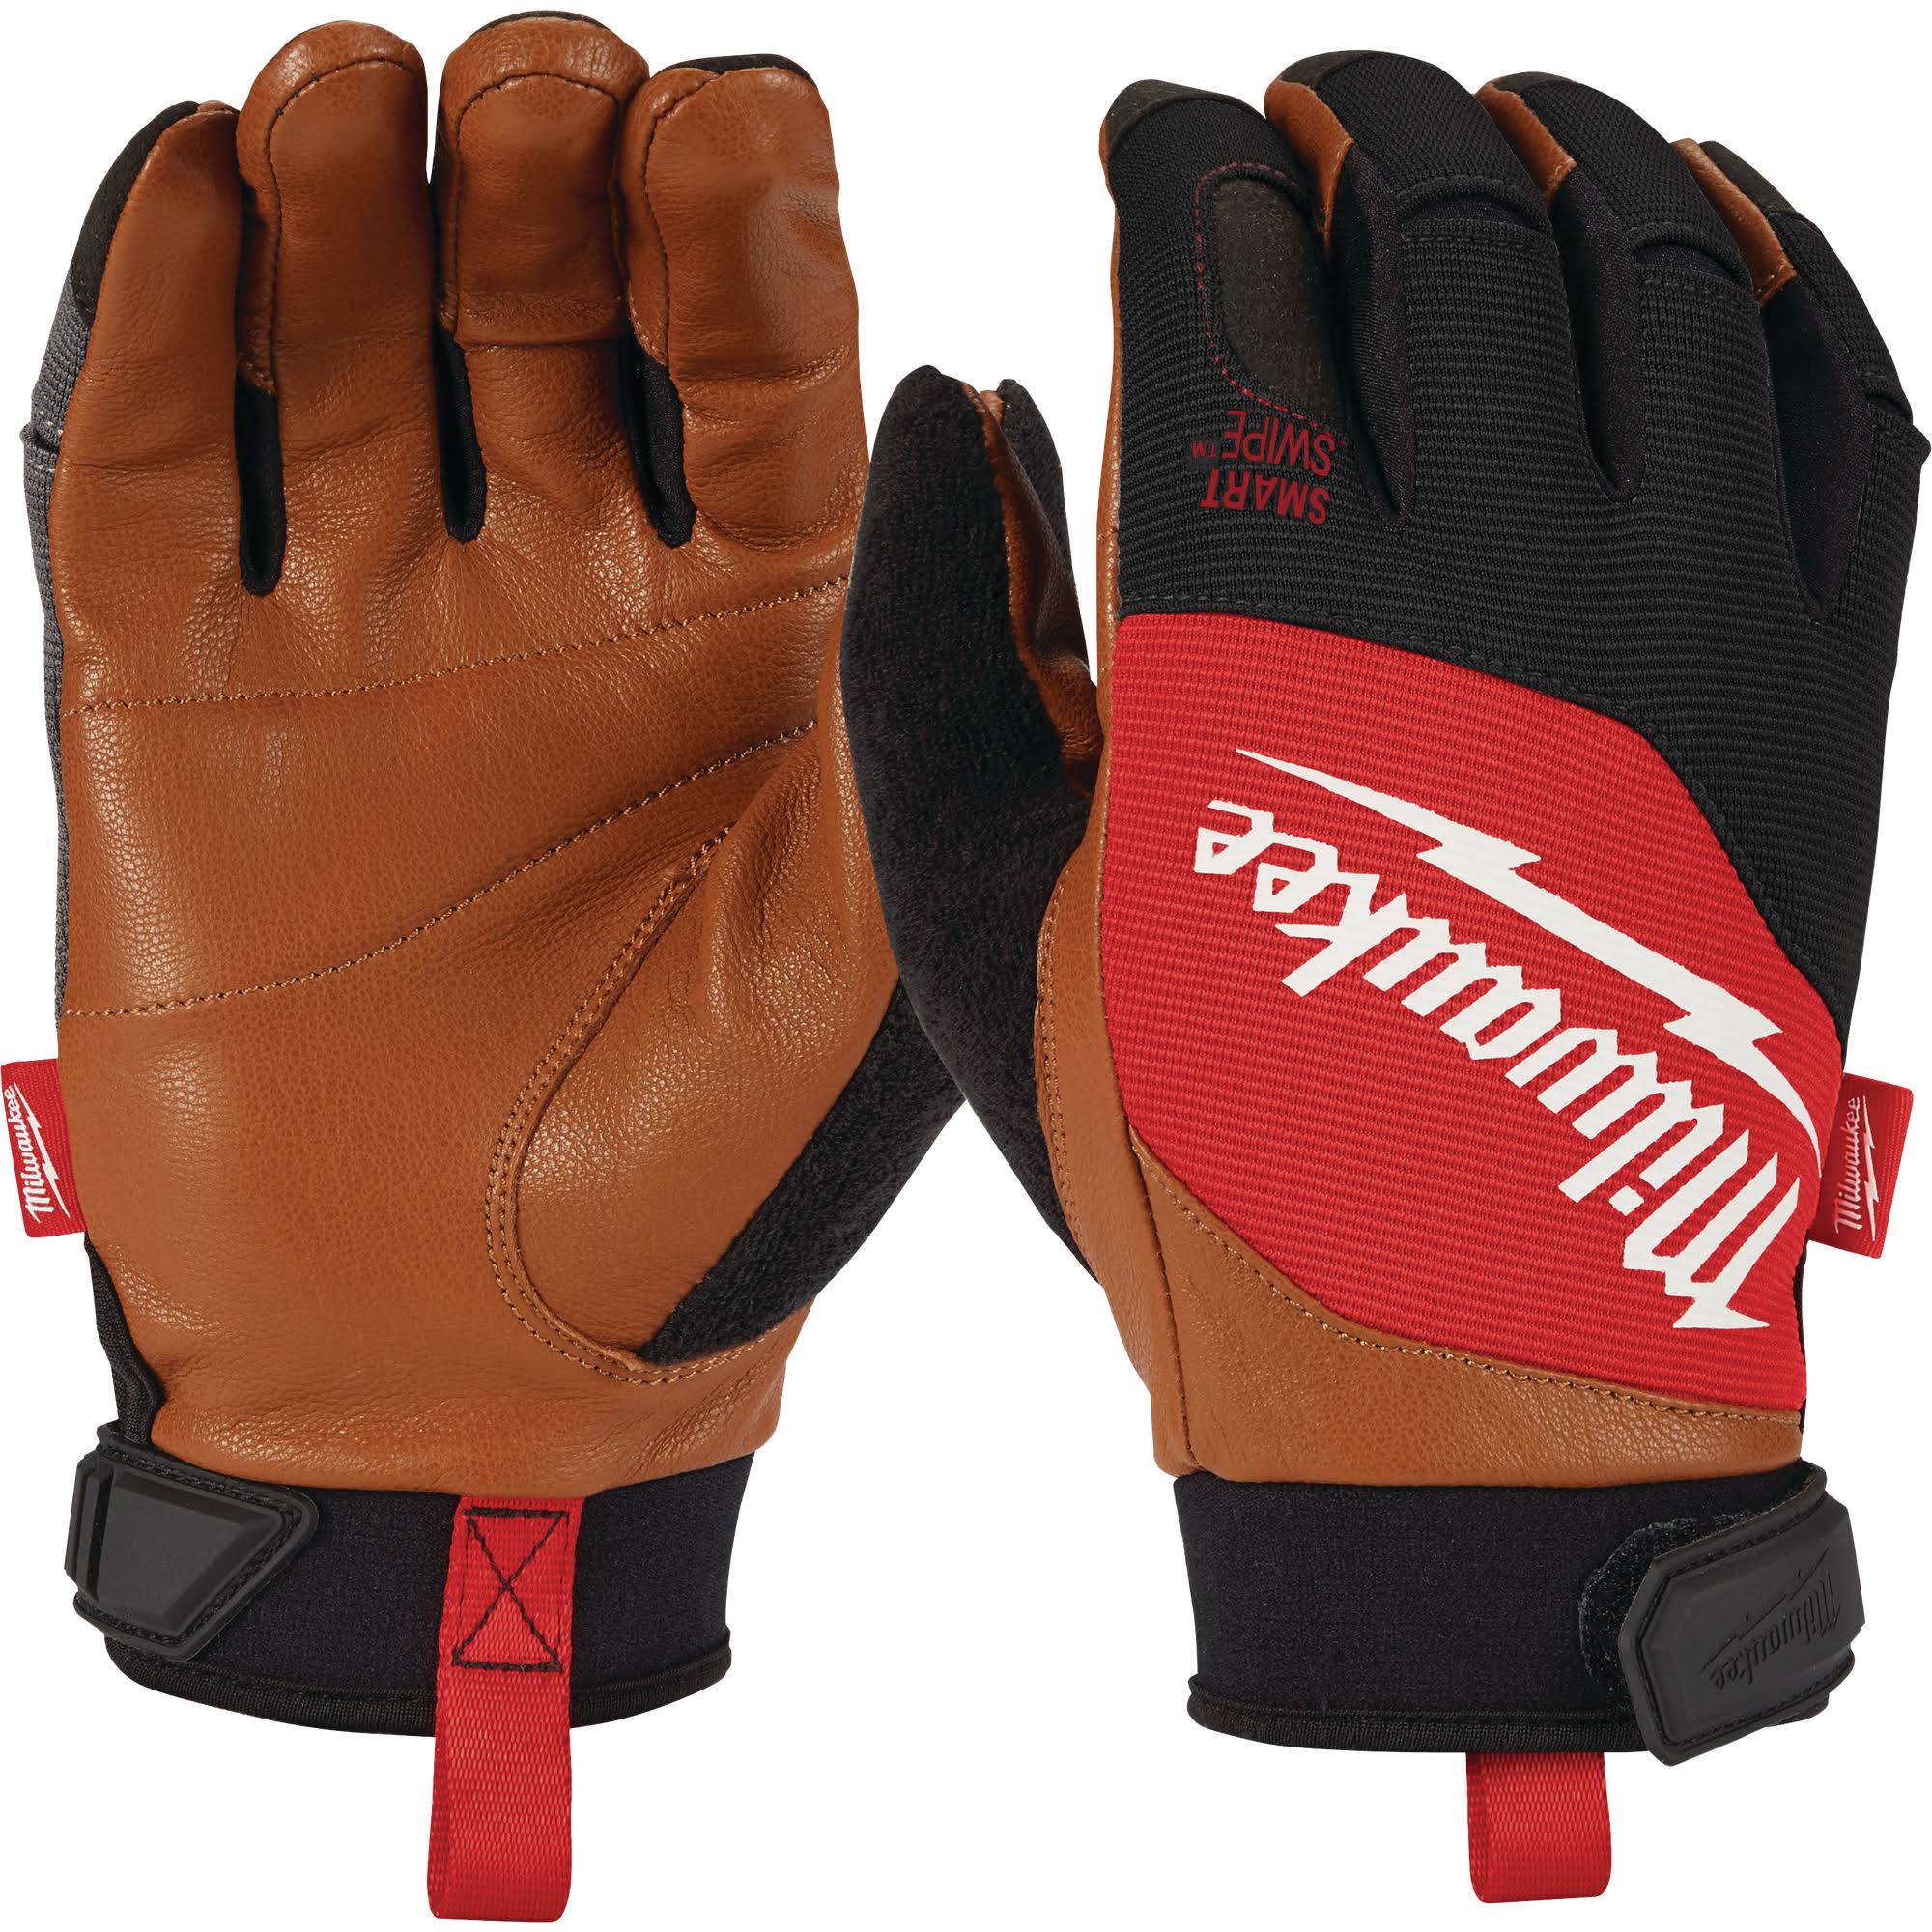 Milwaukee Large Hybrid Leather Gloves 48730022